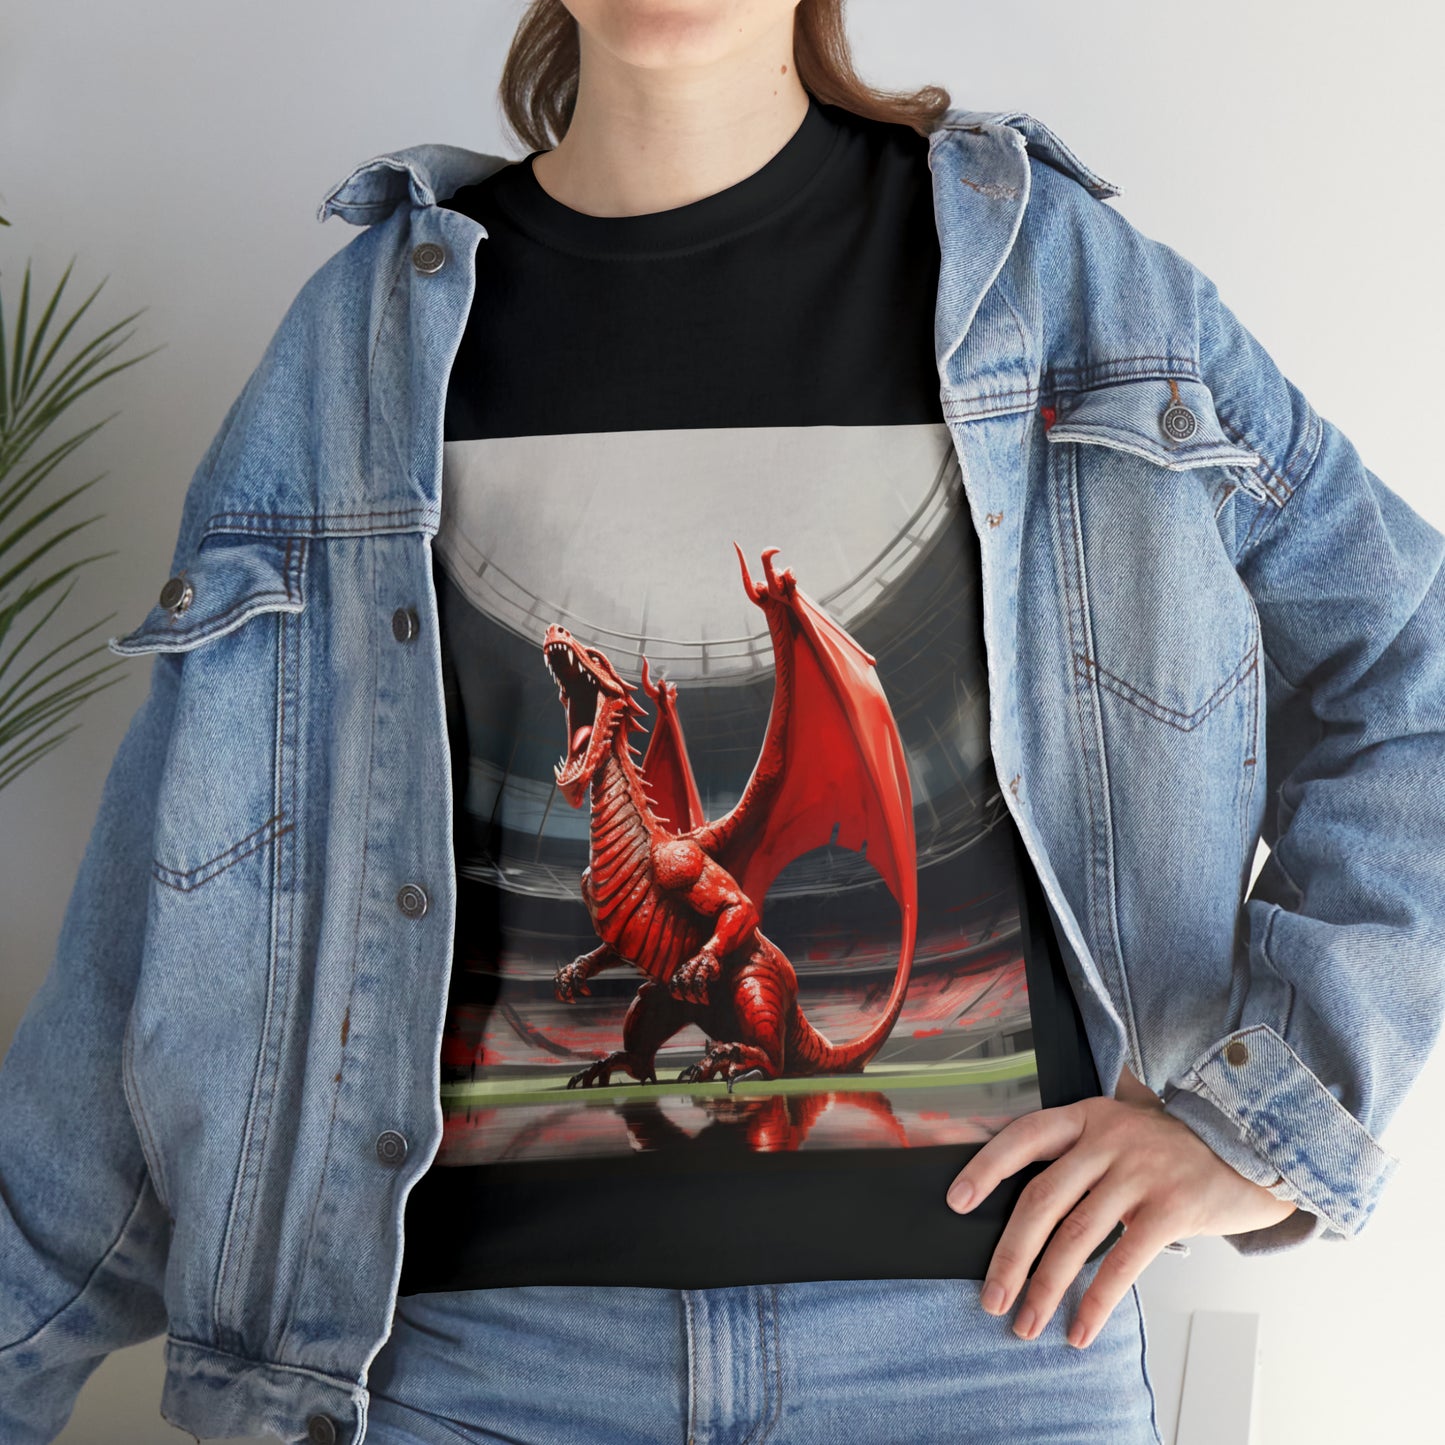 Welsh Dragon 2 - dark shirts